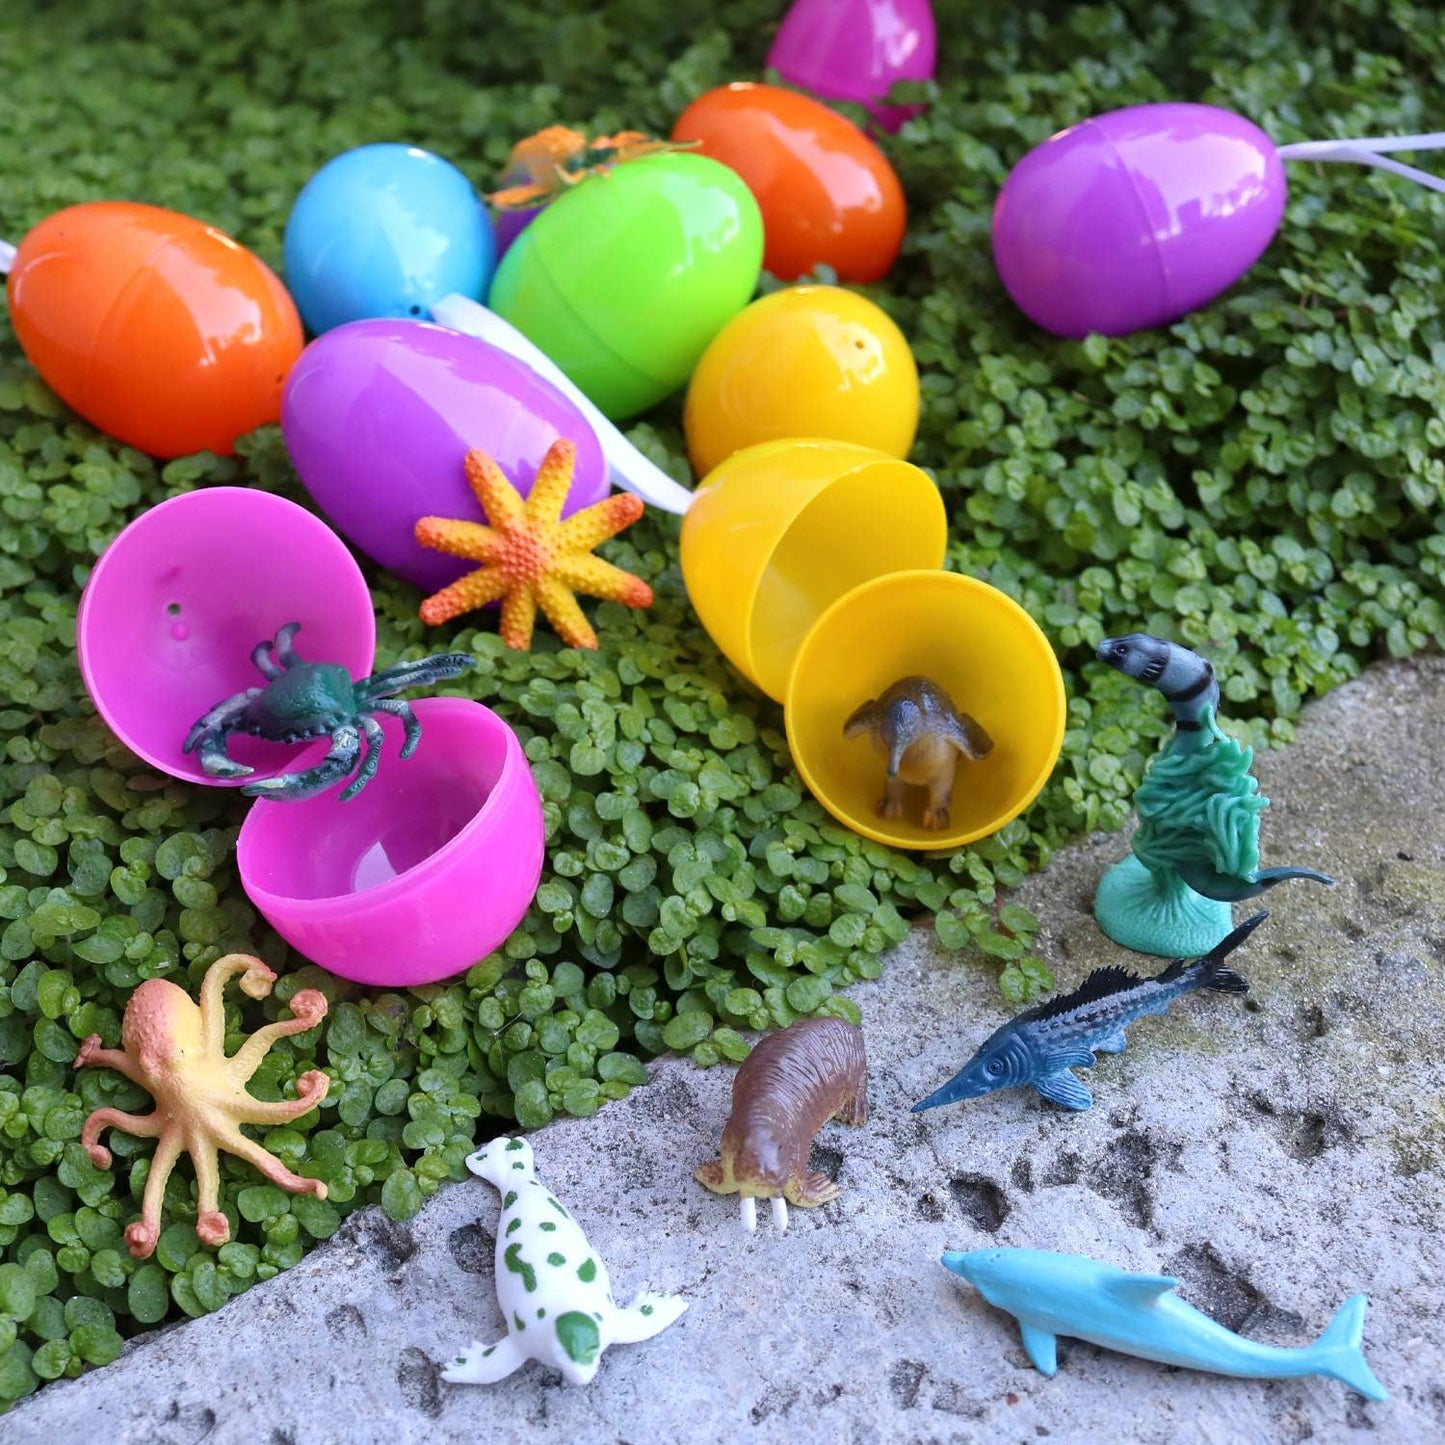 GIFTEXPRESS 36pcs Mini Assorted Ocean Sea Creatures/ Animals Toy Figures